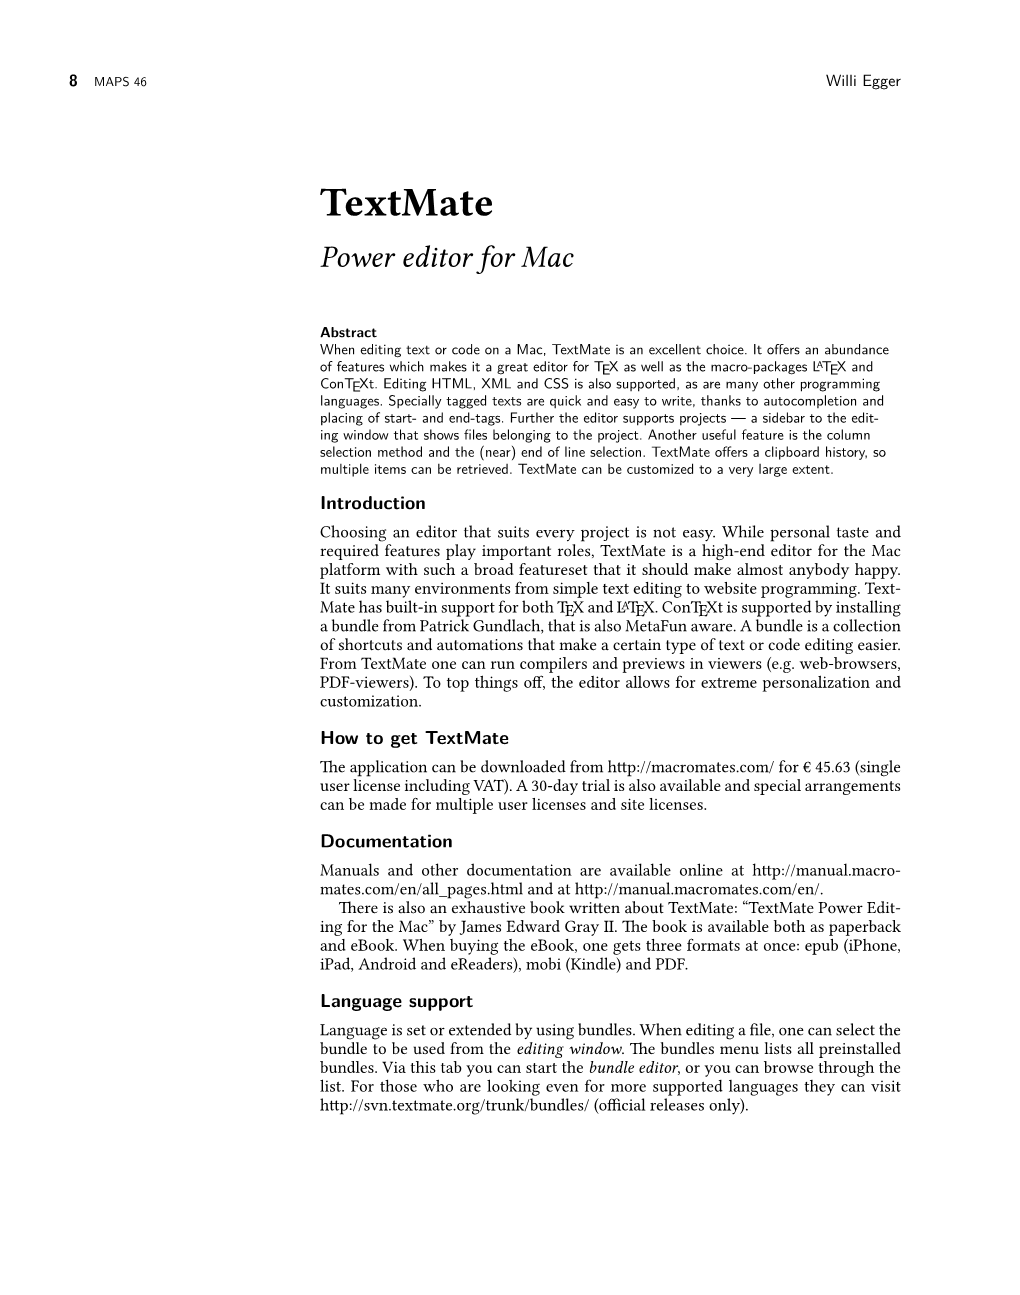 Textmate Power Editor for Mac